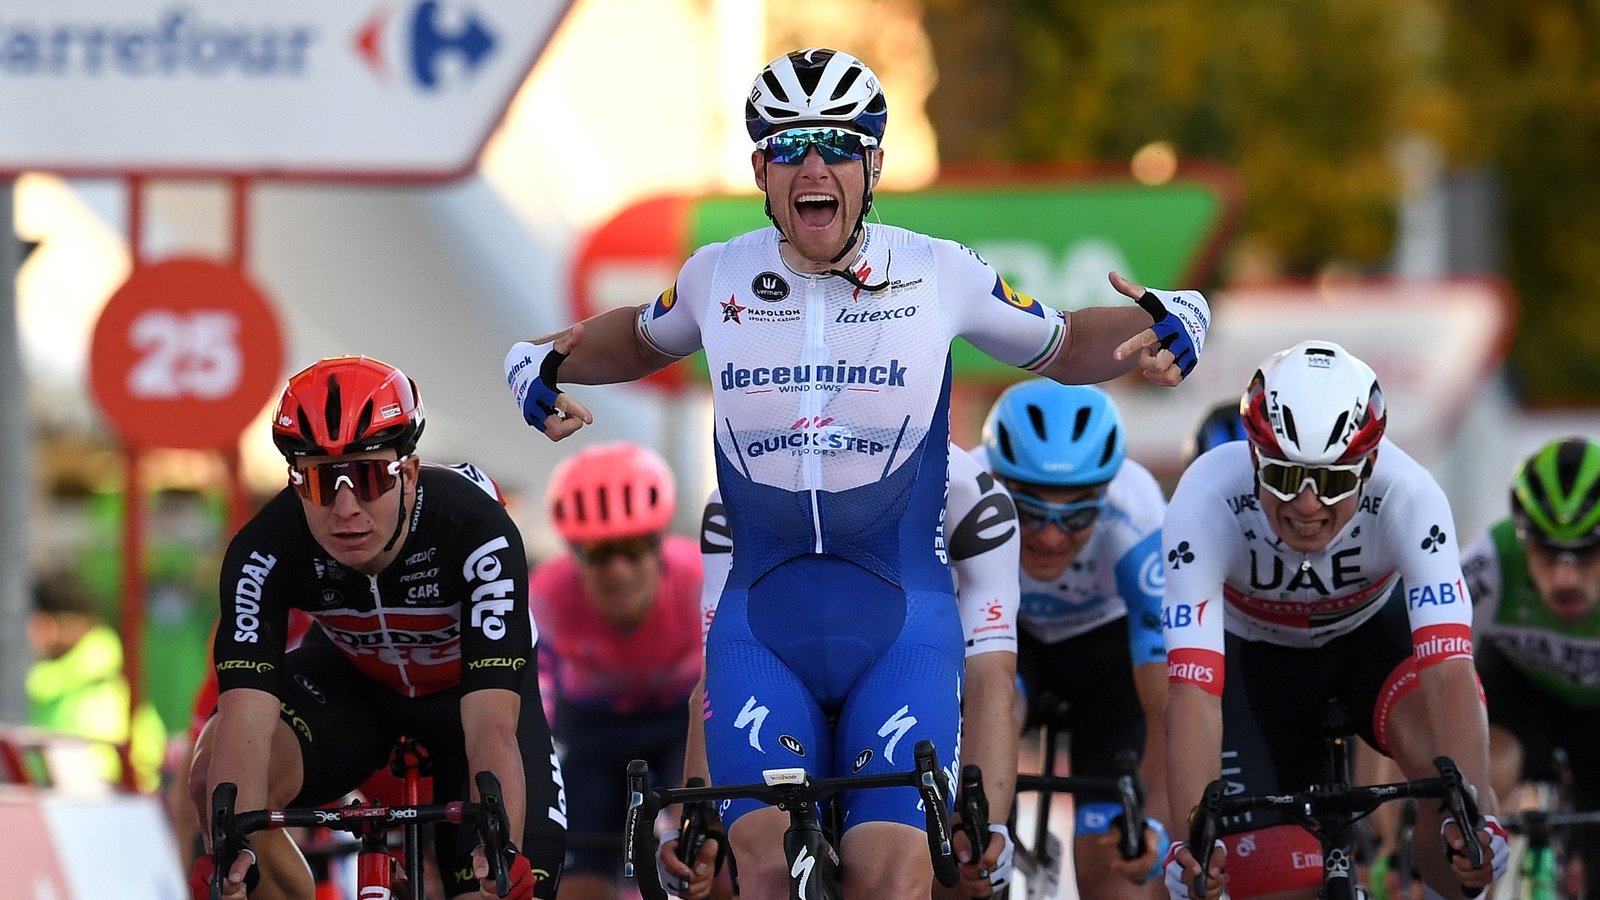 Bennett wins & loses Vuelta stage 9 - Twisted Spoke